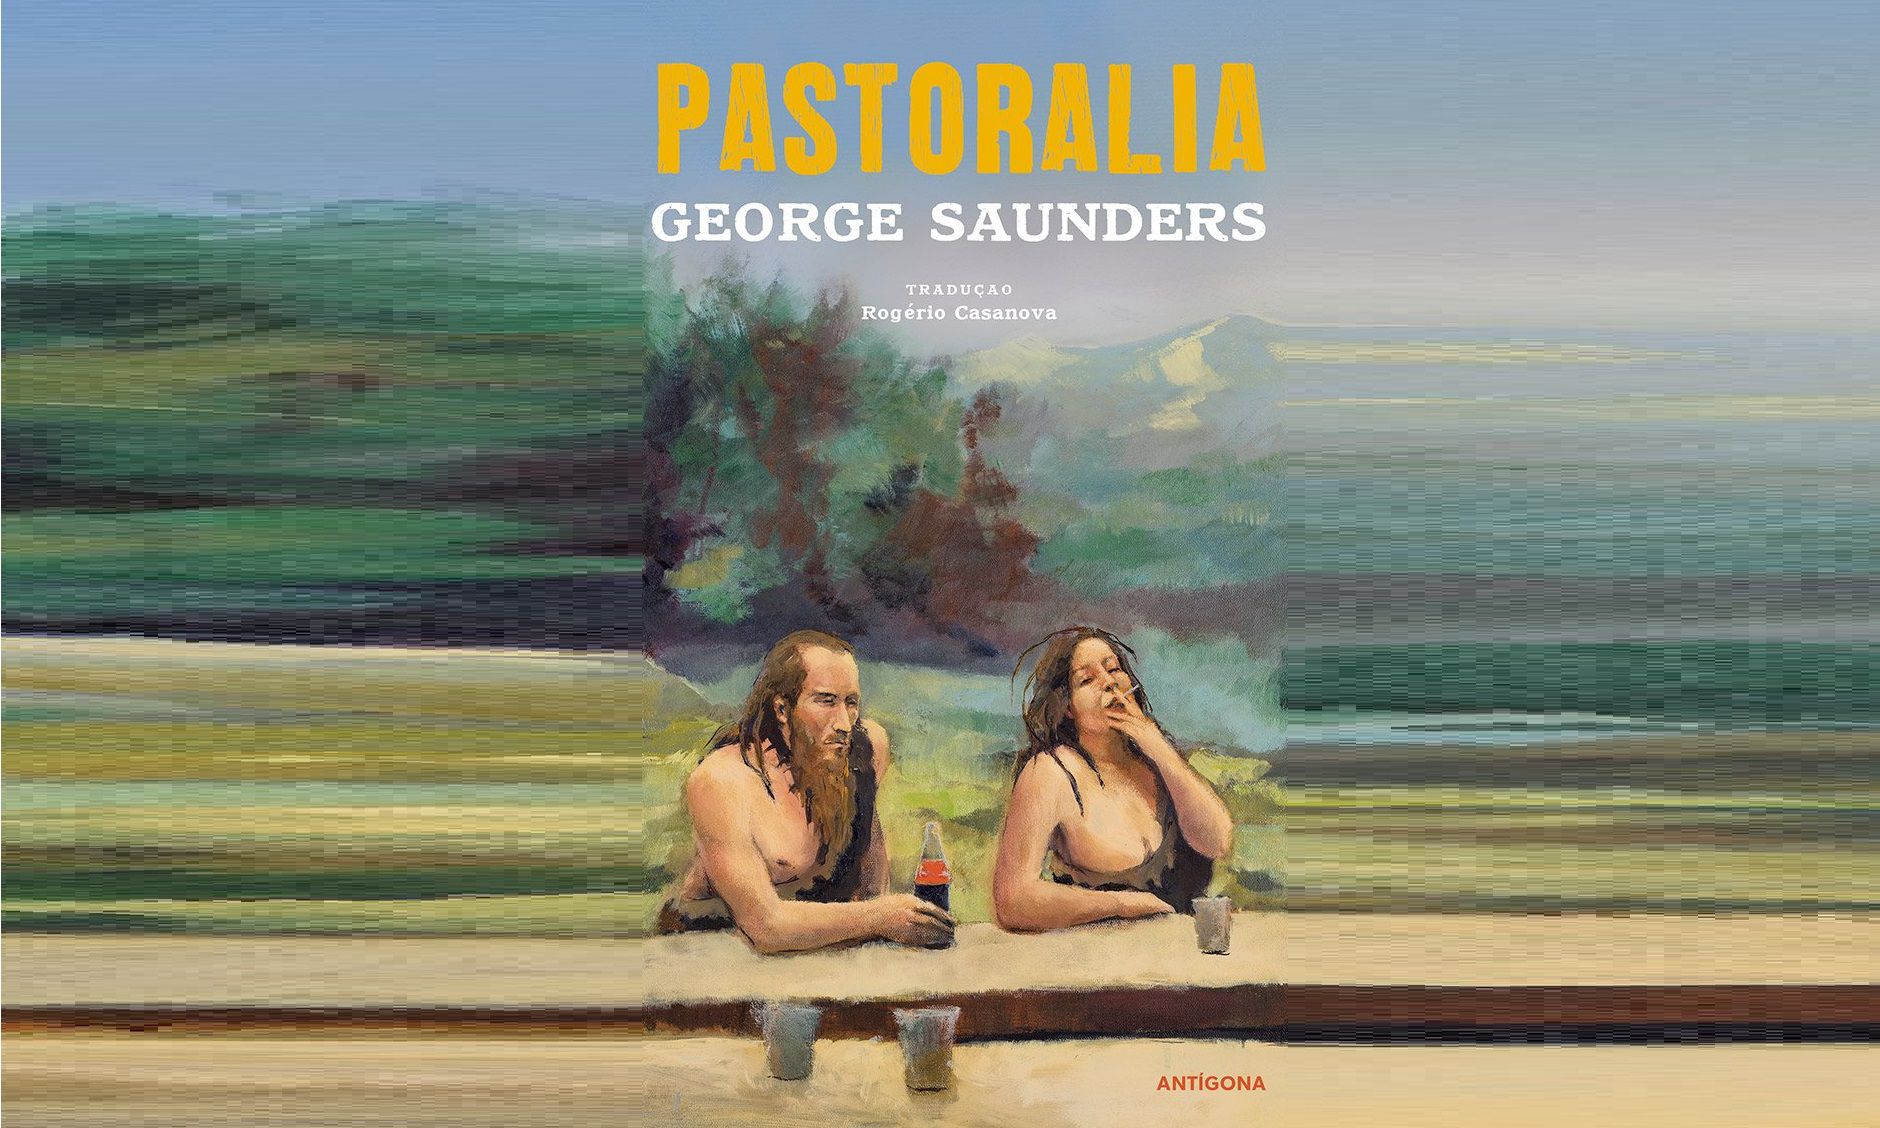 “Pastoralia”, de George Saunders: somos todos personagens no teatro do absurdo